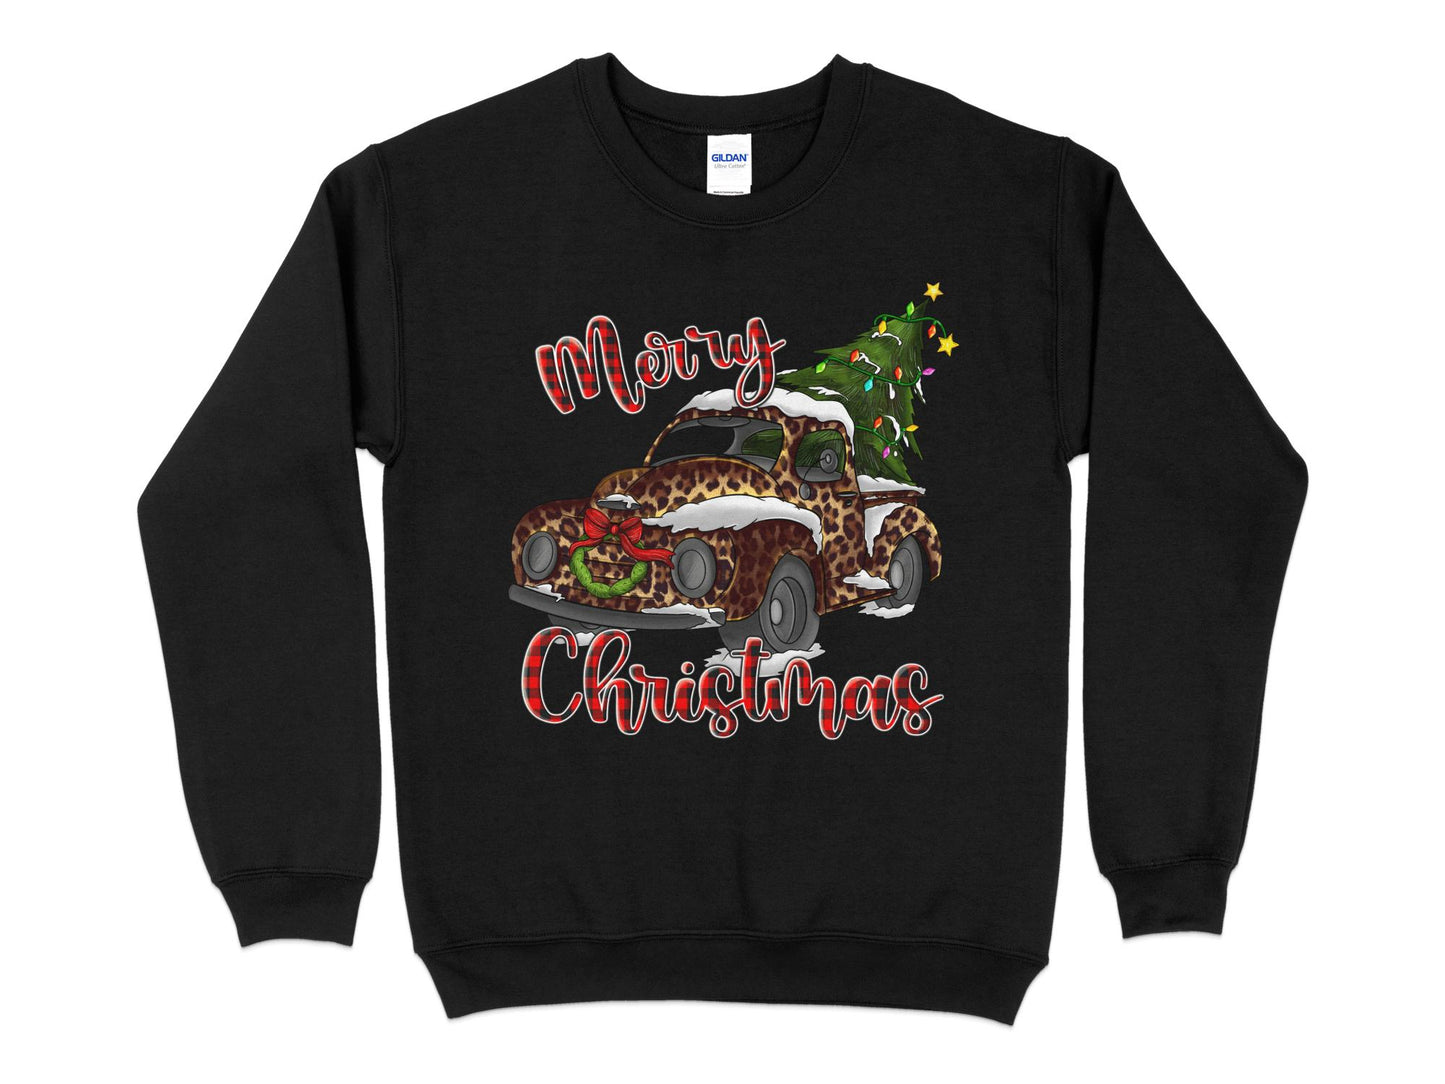 Merry Christmas Leopard Print Truck Sweatshirt, Christmas Sweater for Women, Christmas Gift for Women, Holiday Sweater, Xmas Shirt - Mardonyx Sweatshirt S / Black